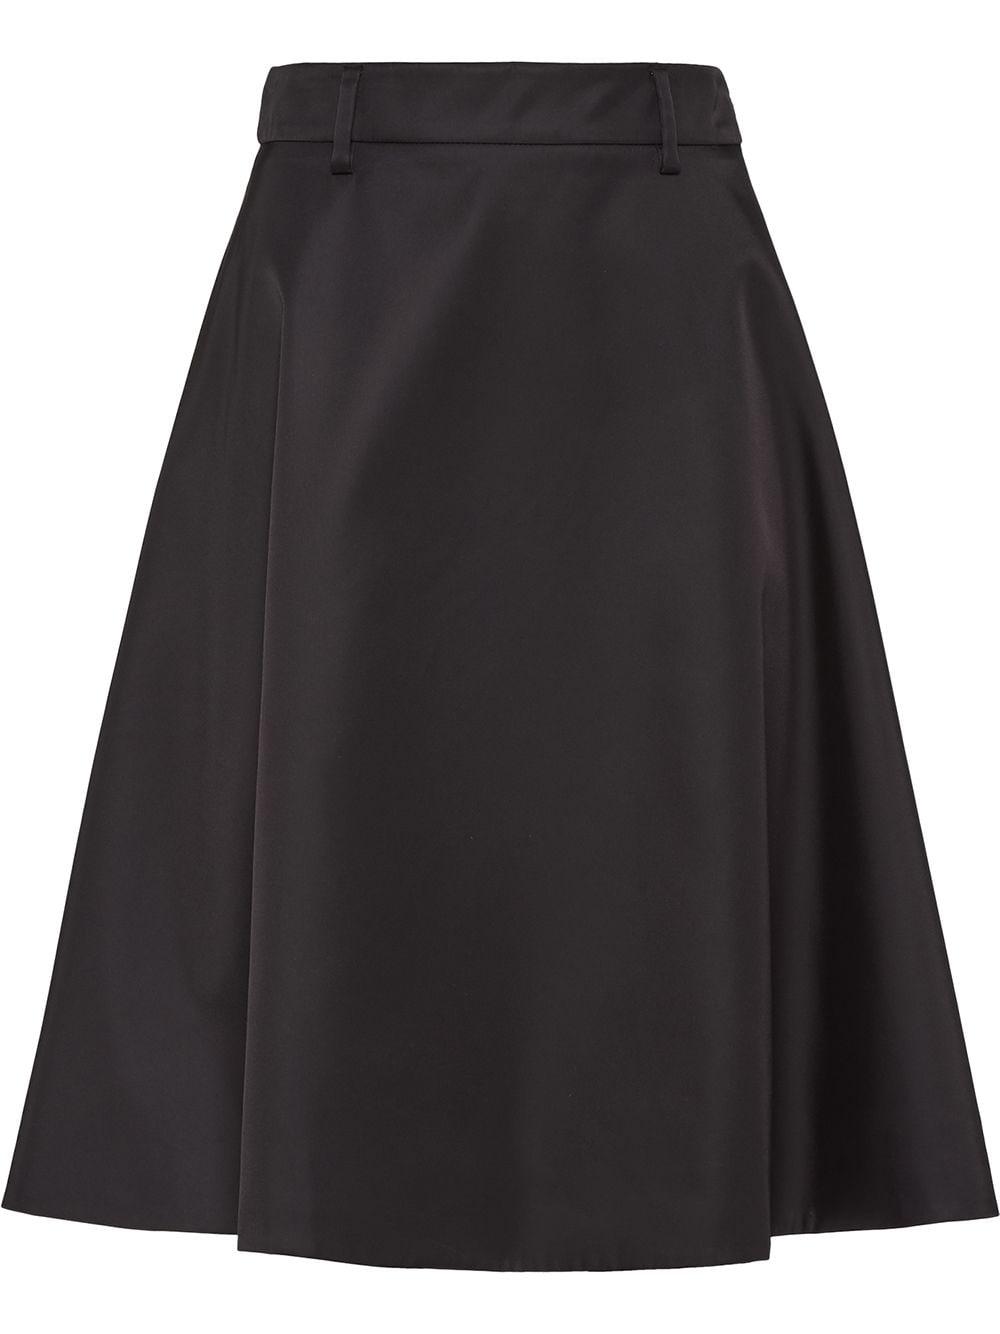 Prada Synthetic Nylon Gabardine Skirt in Black - Save 20% - Lyst